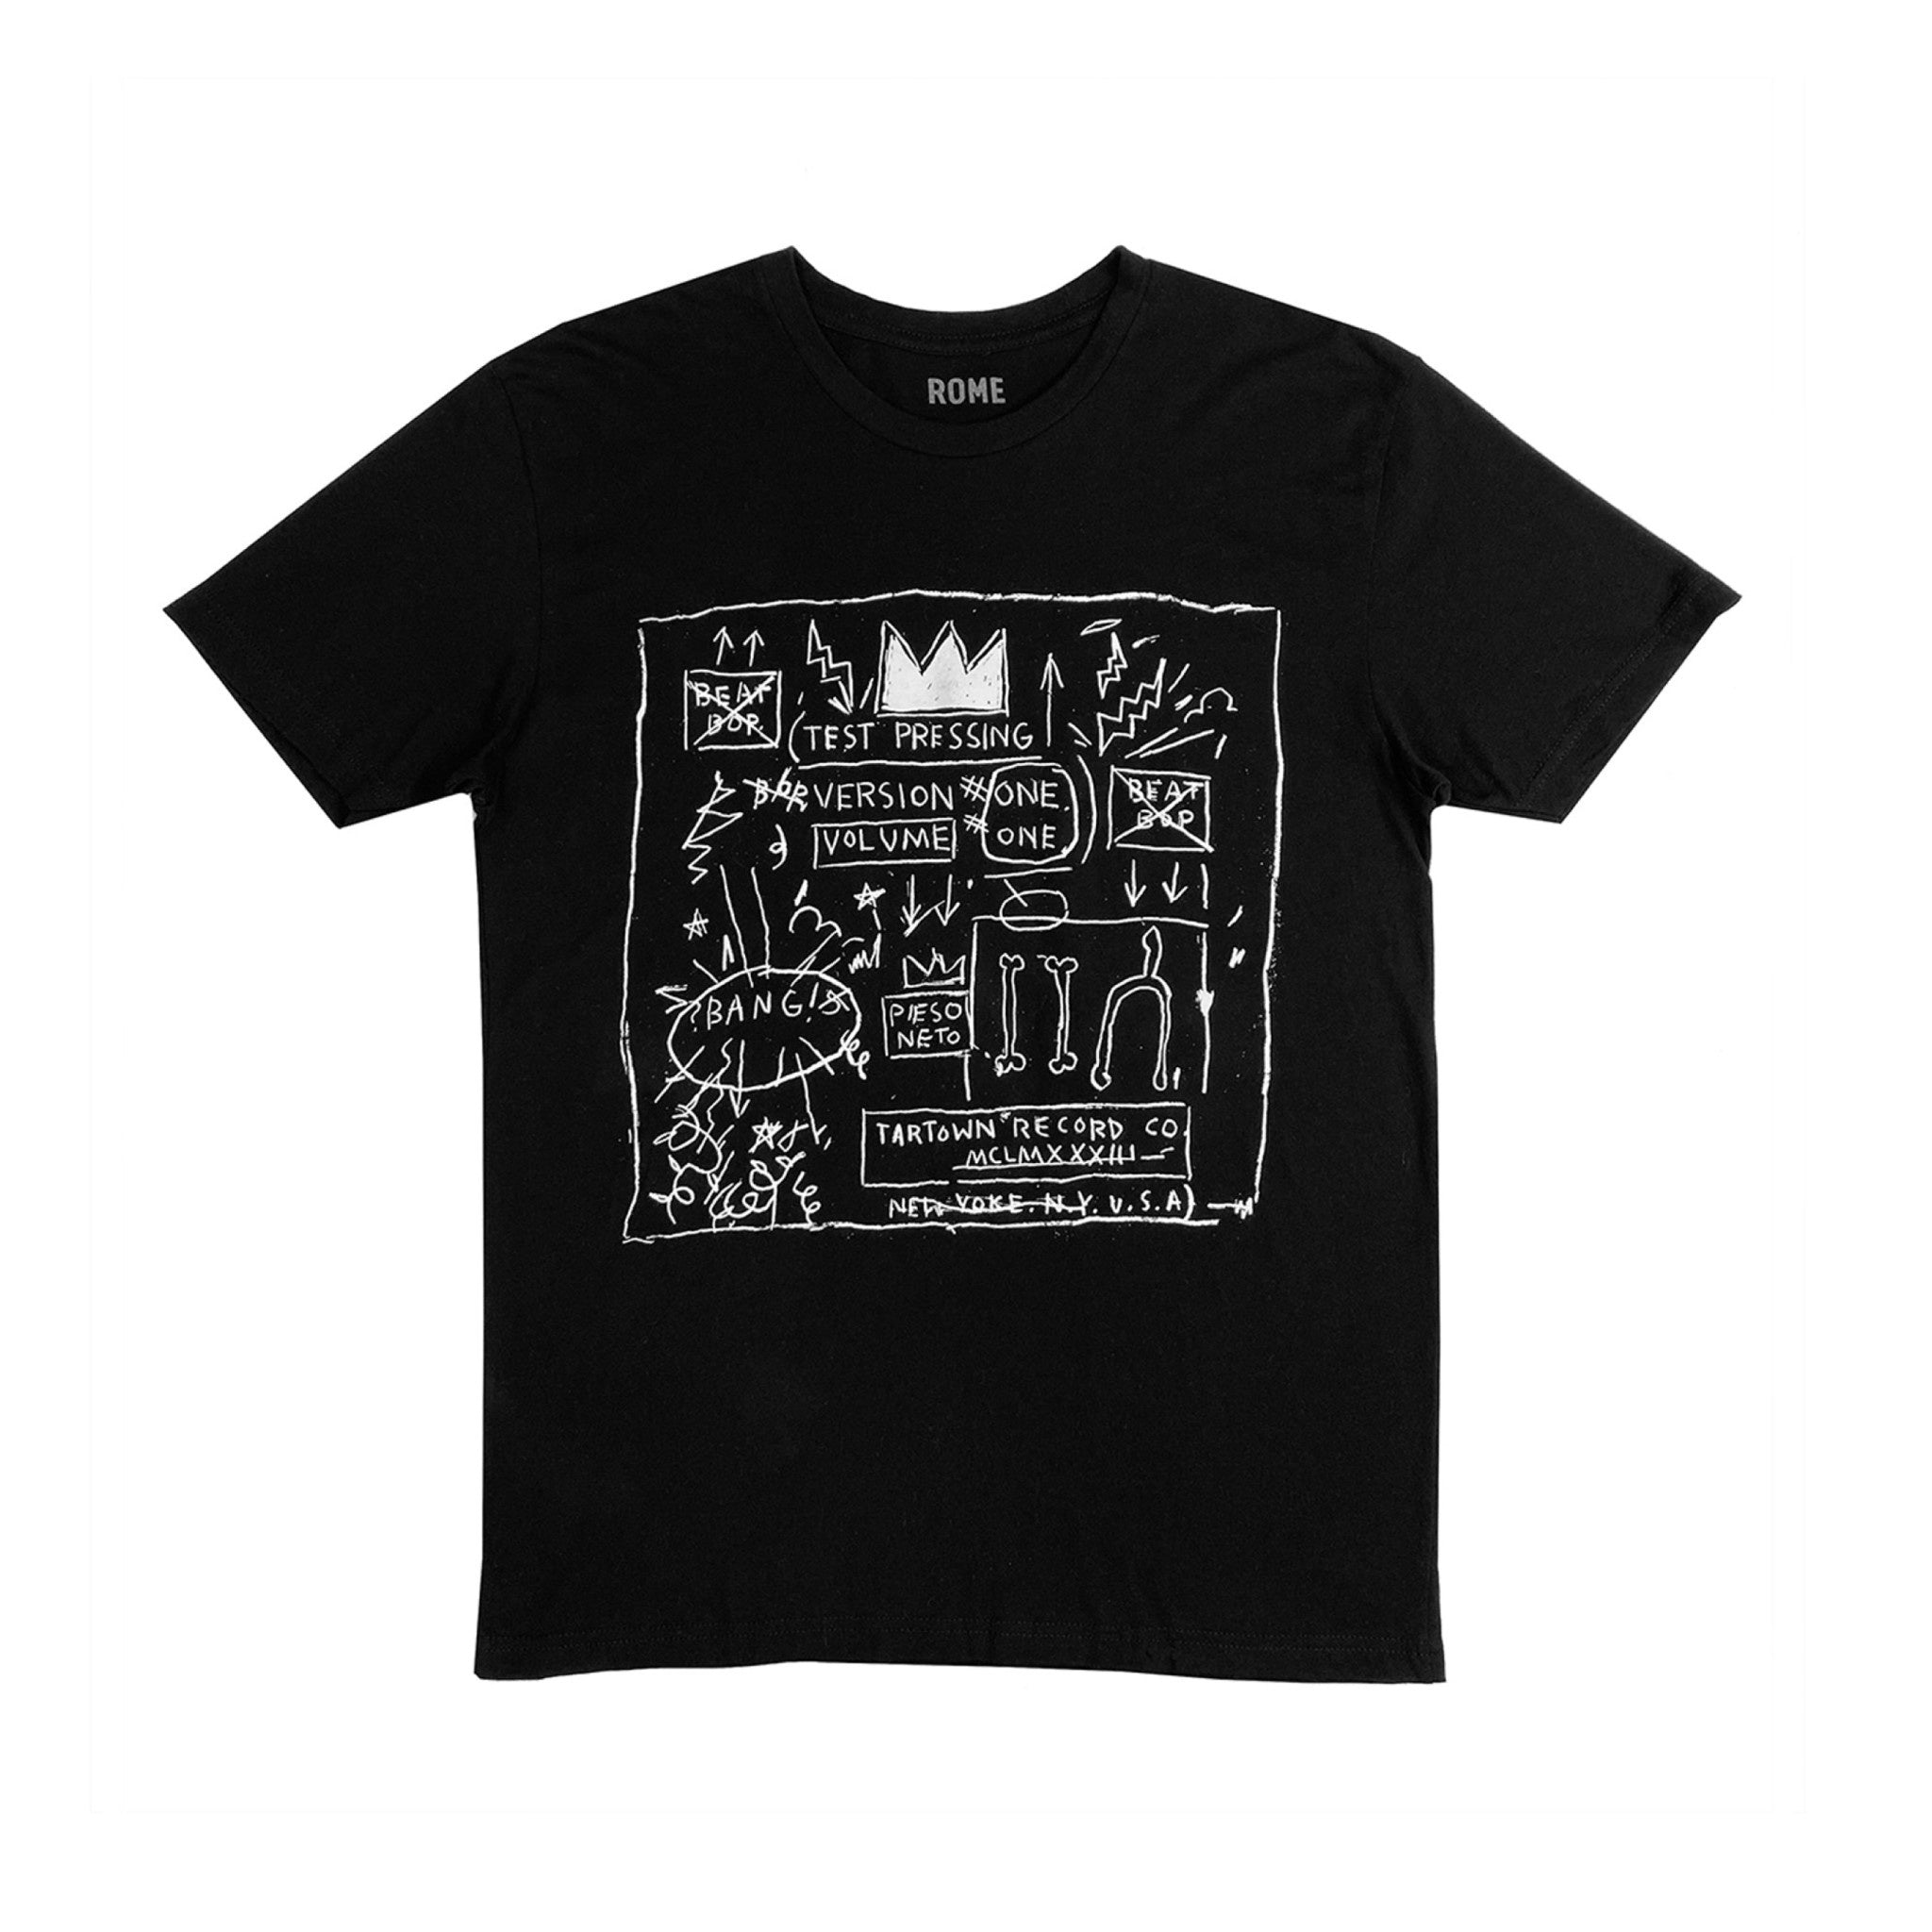 Basquiat BEAT BOP T-shirt - Wynwood Walls Shop